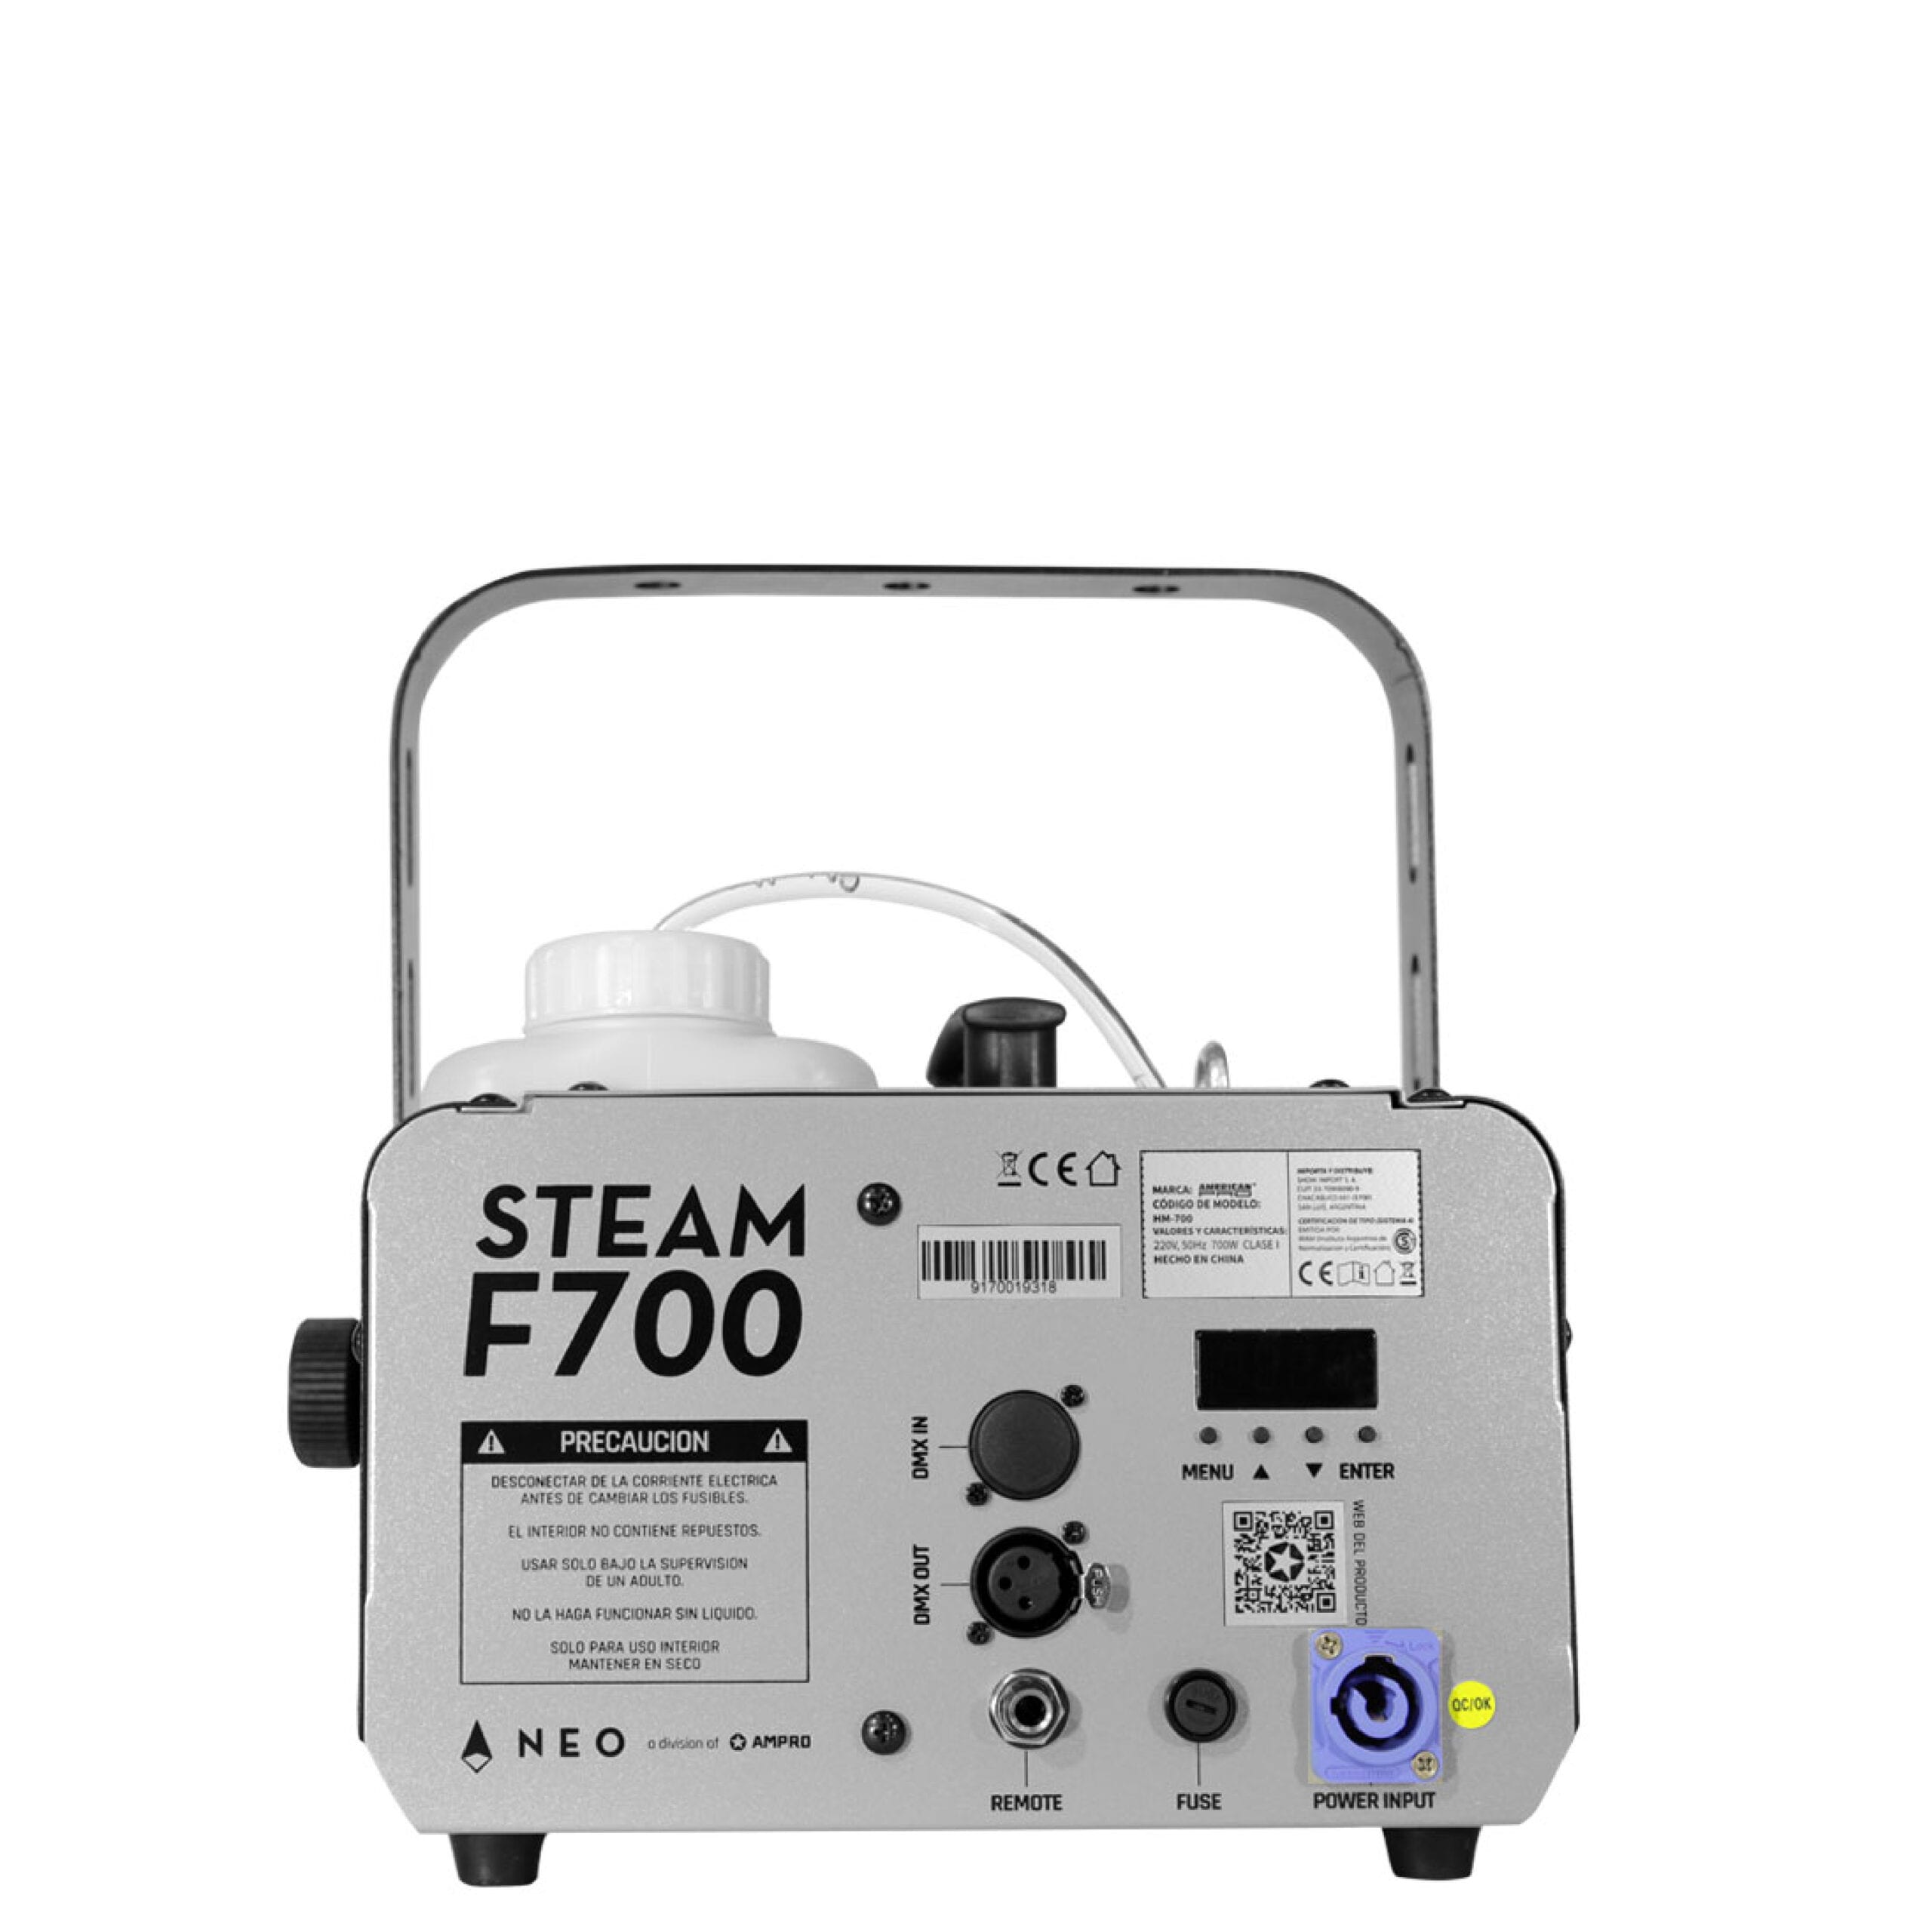 SteamF700-3